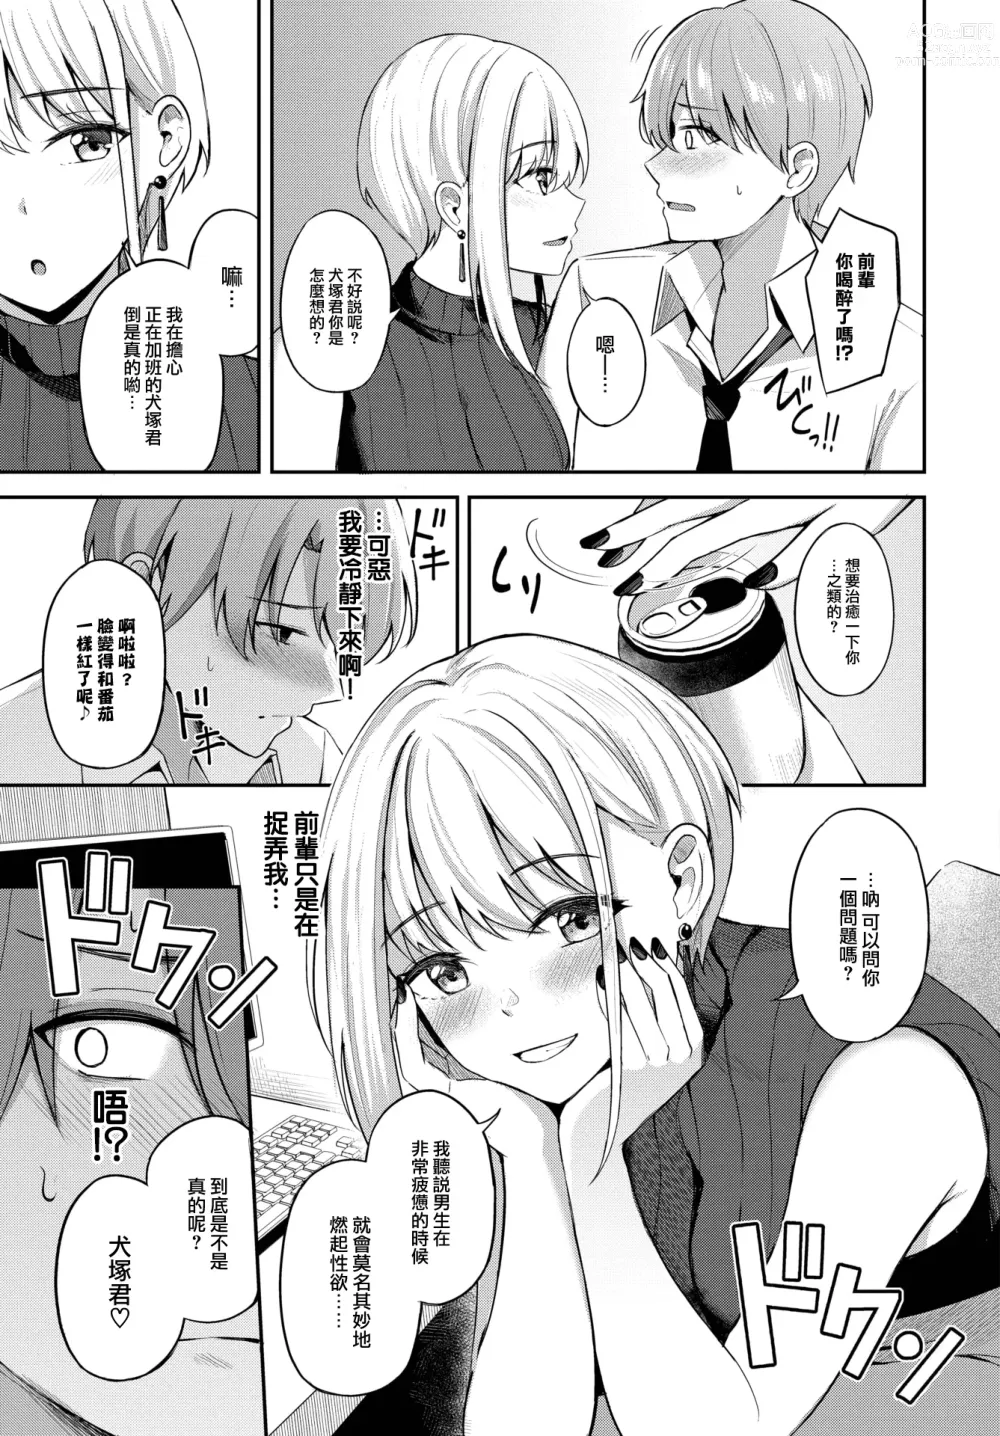 Page 6 of manga Namaiki Senpai